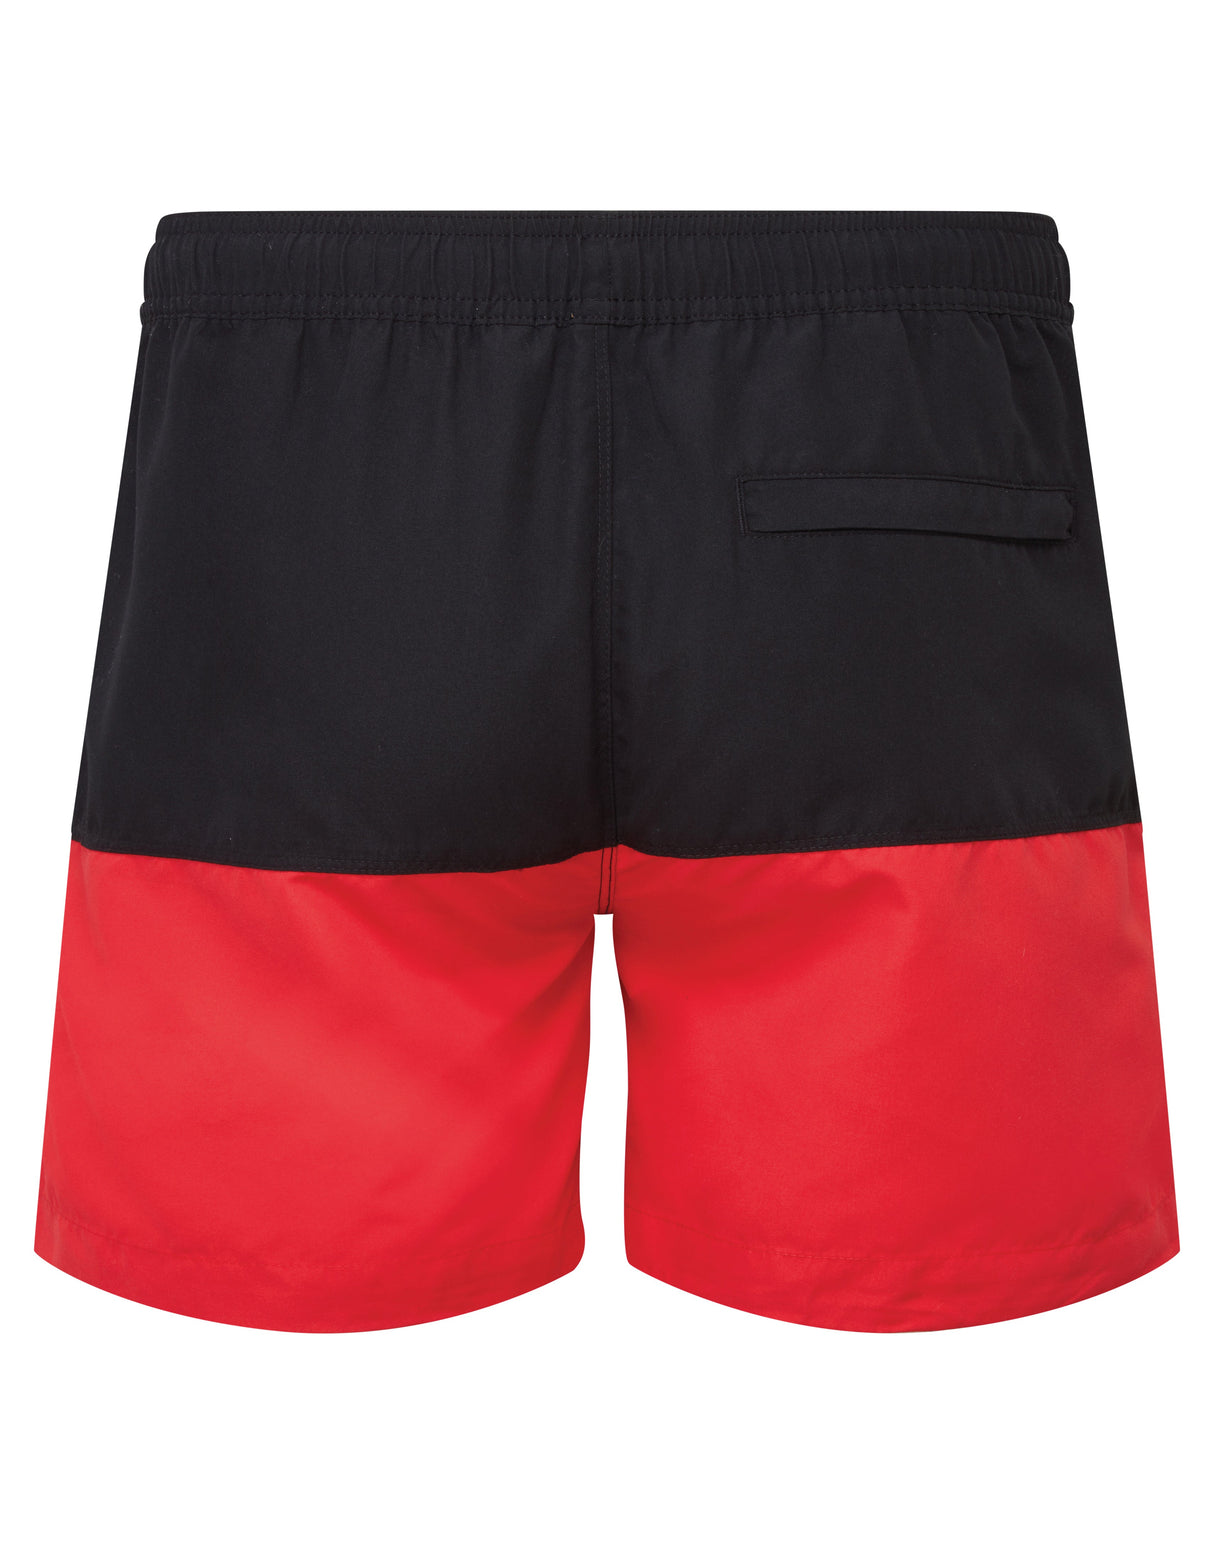 Asquith & Fox Block Colour Swim Shorts